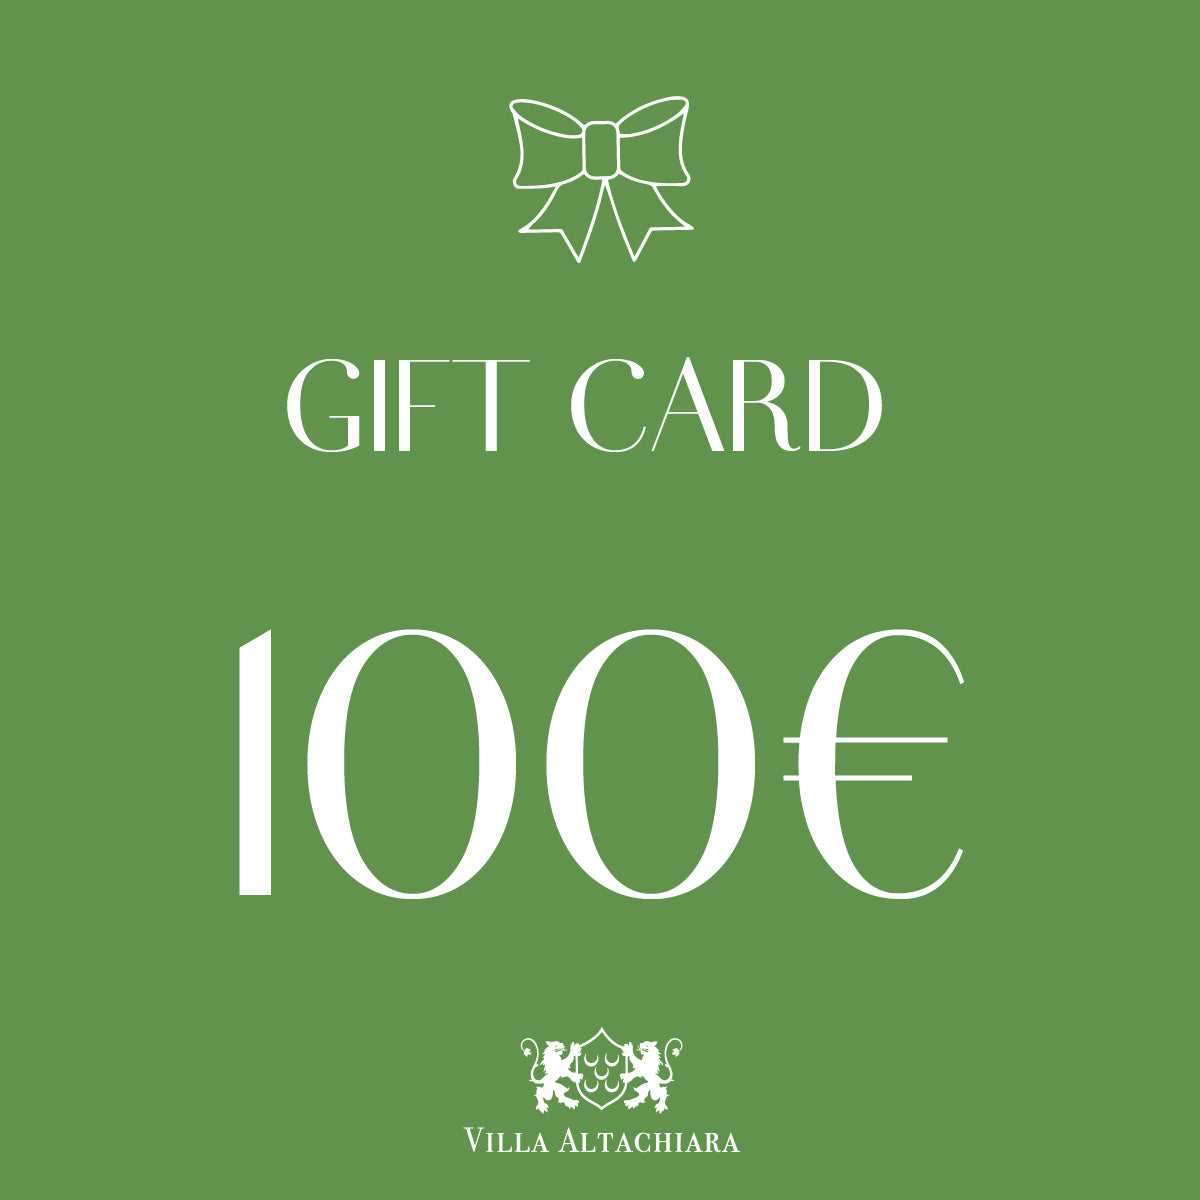 Gift card €100